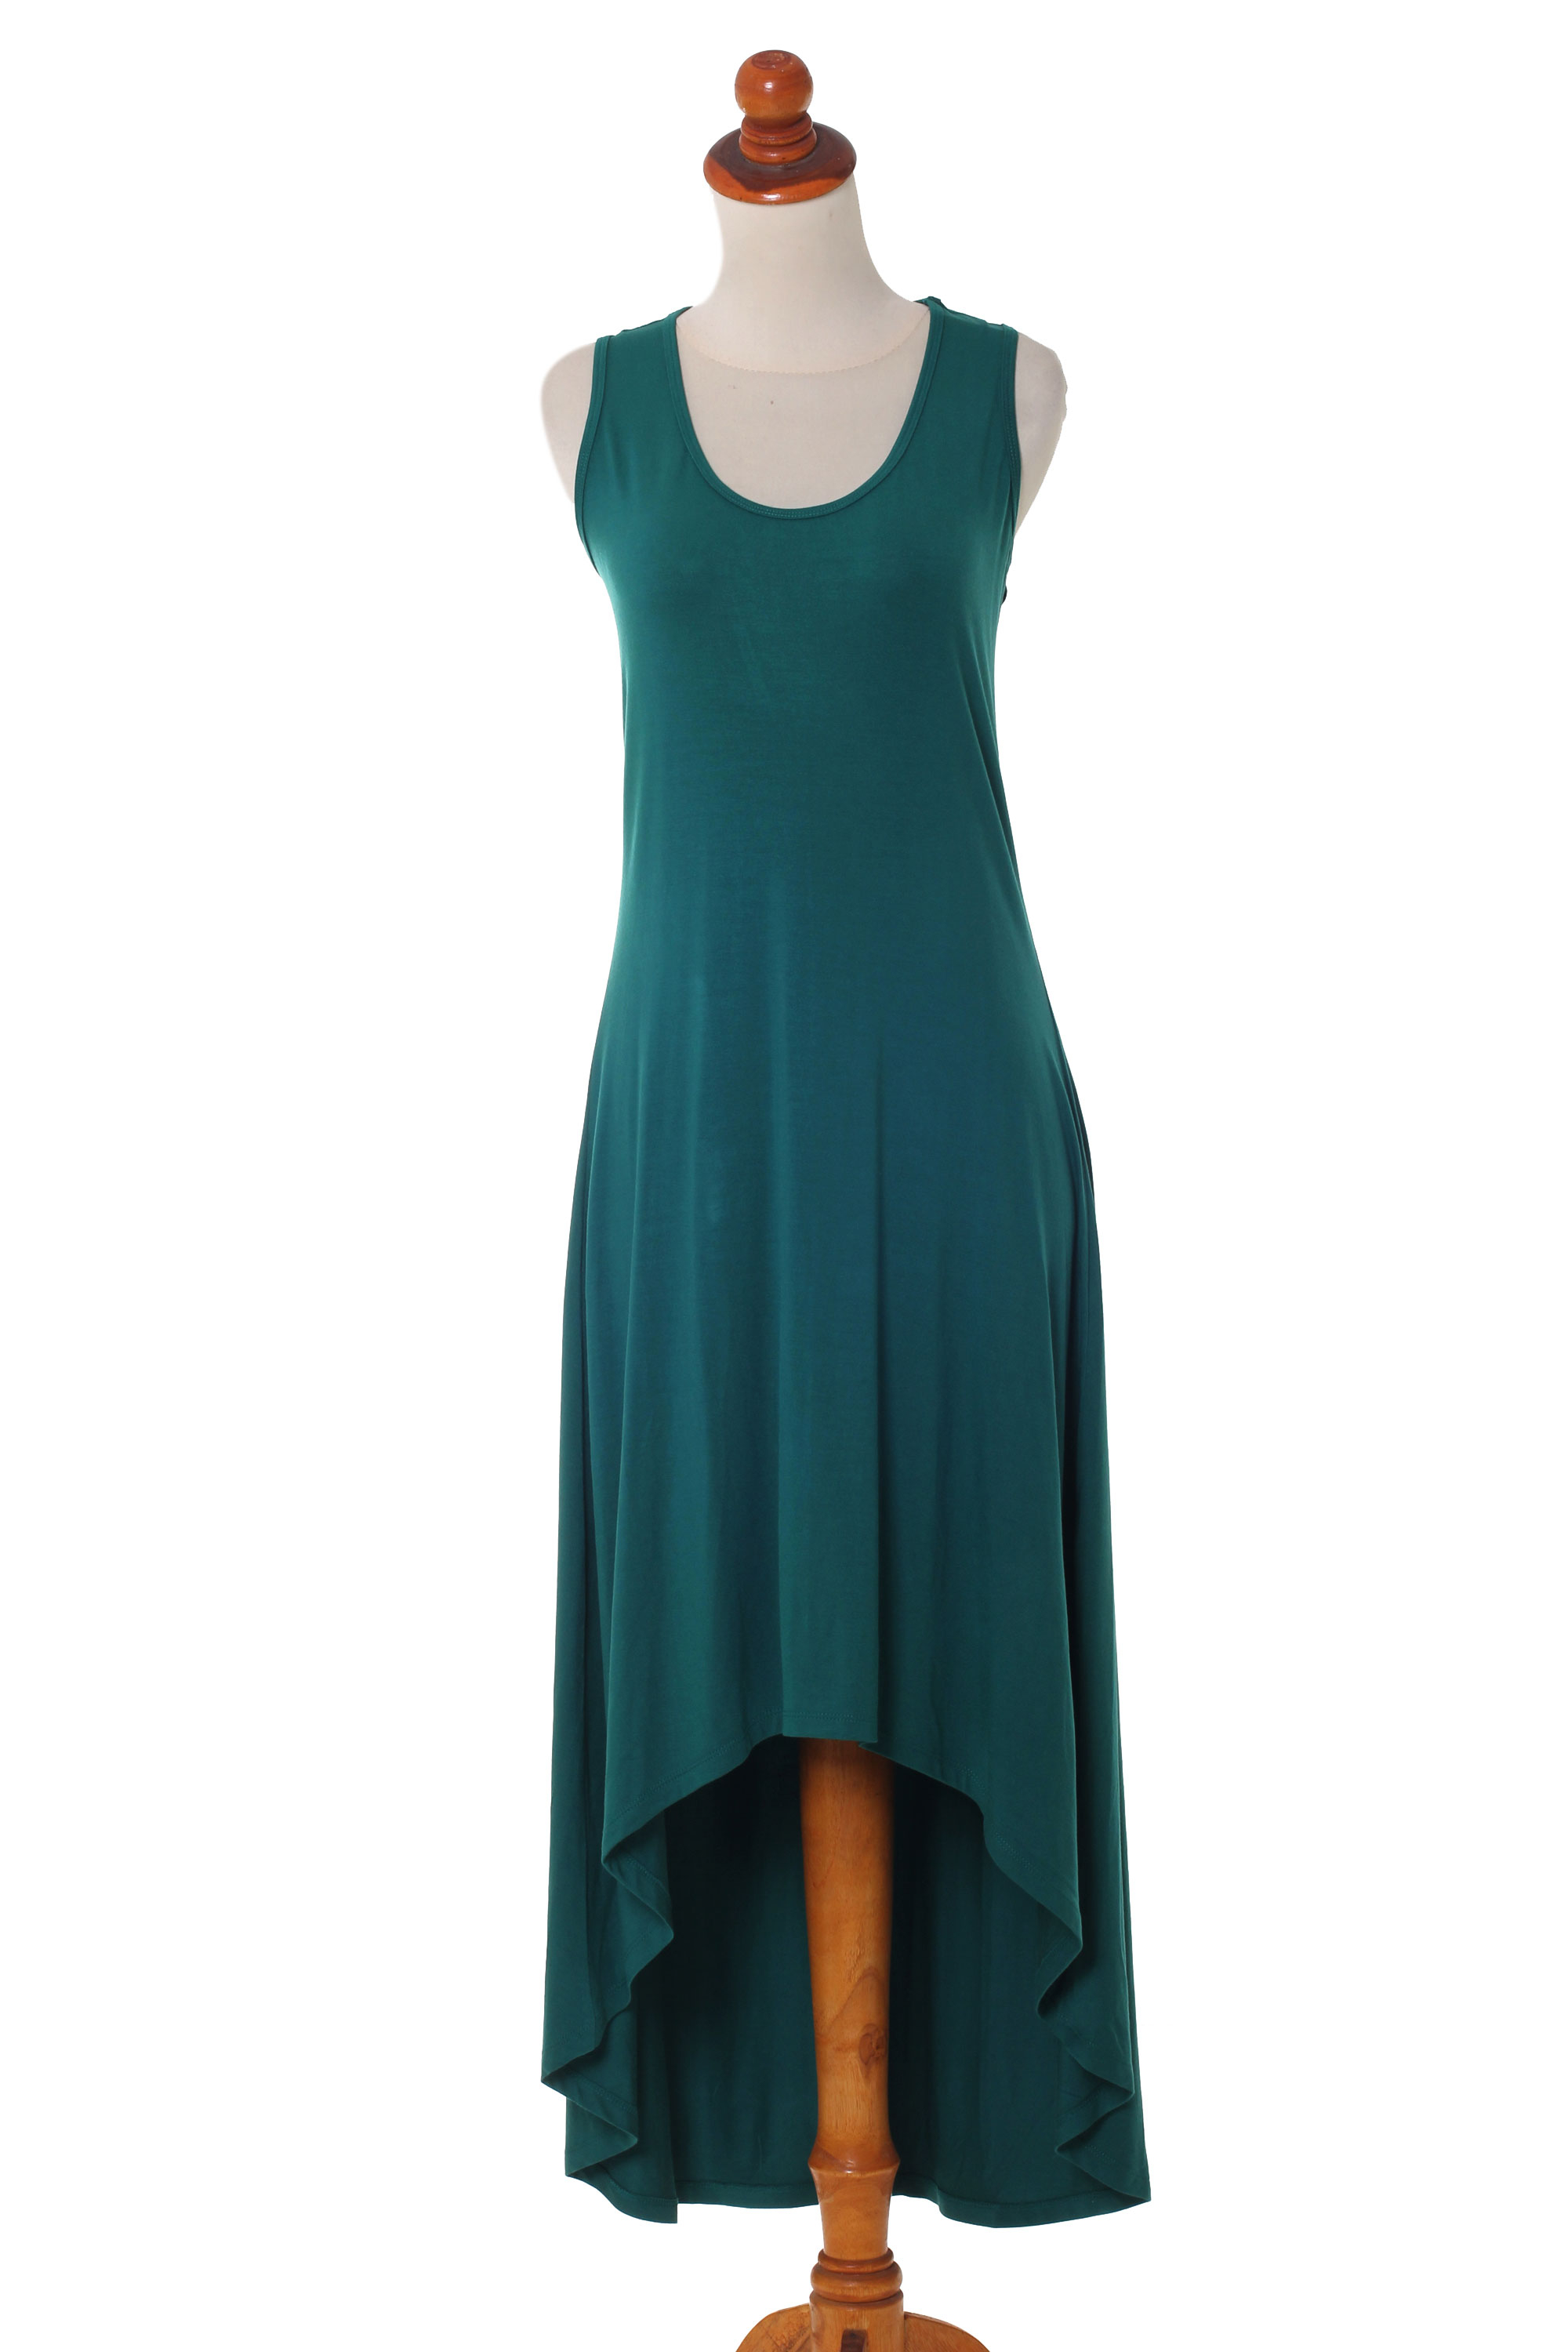 Green Sleeveless Modal Dress with High-Low Hem - Emerald Frangipani ...